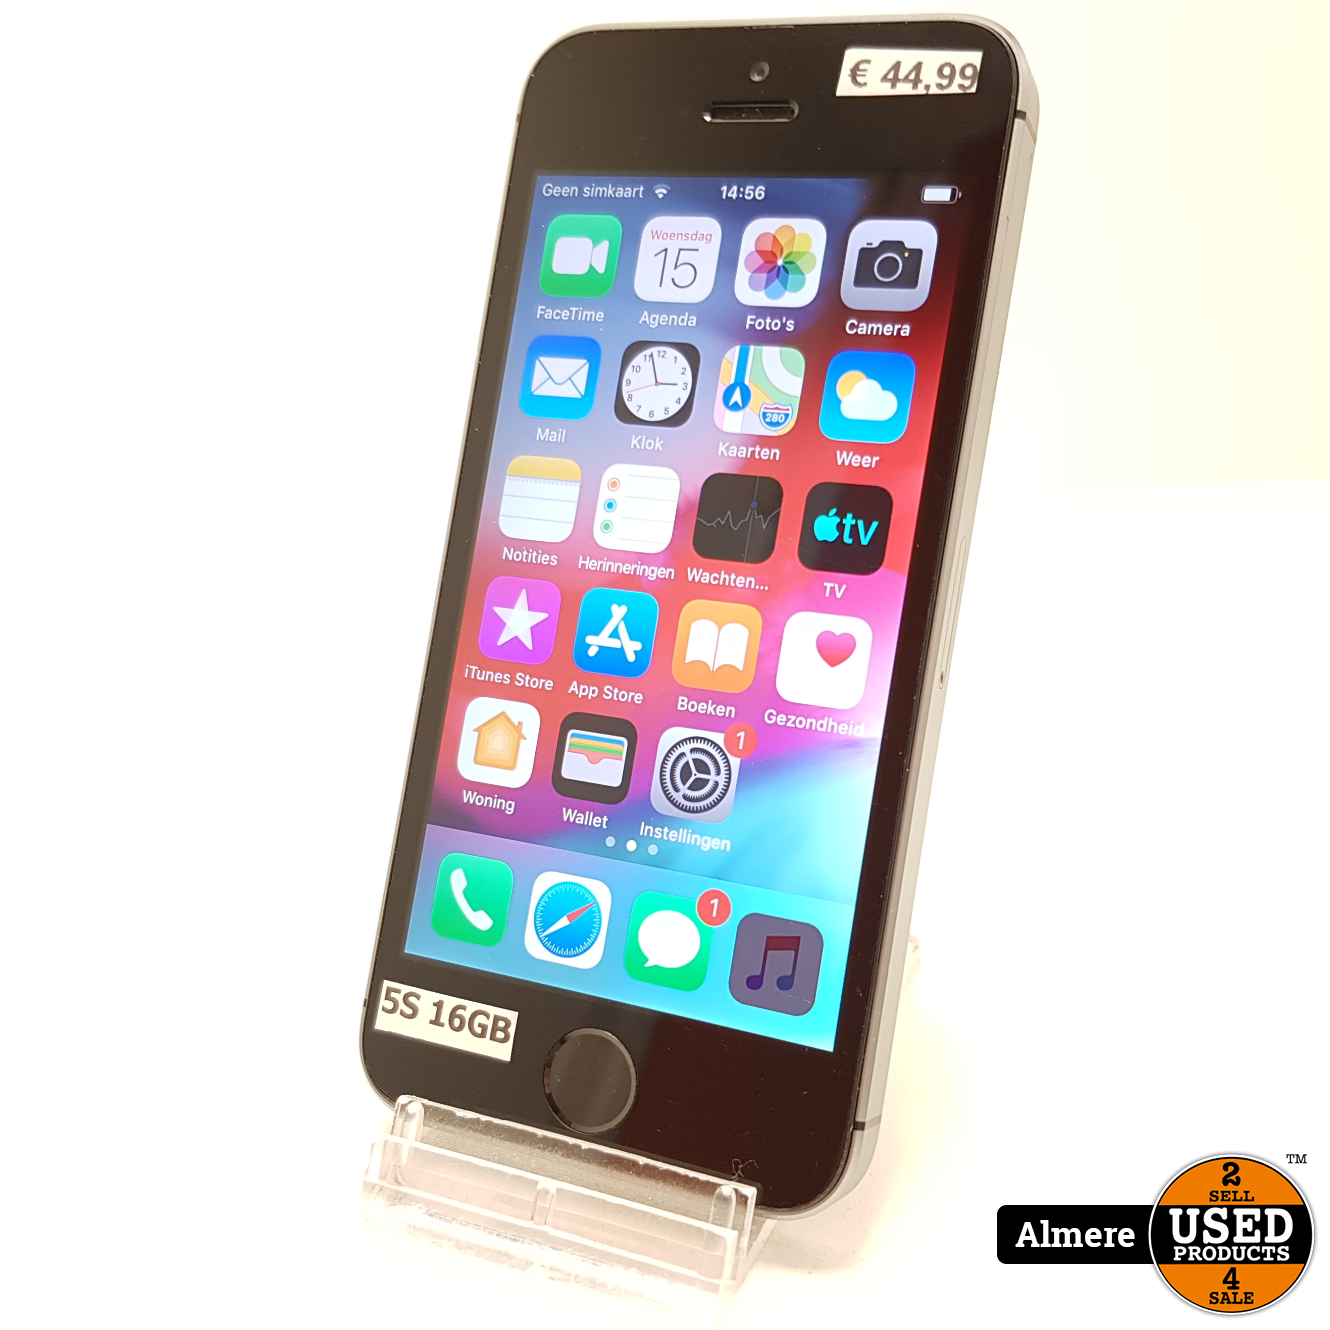 Wasserette Potentieel vloot Apple iPhone 5S 16GB Space Gray | Redelijke staat - Used Products Almere